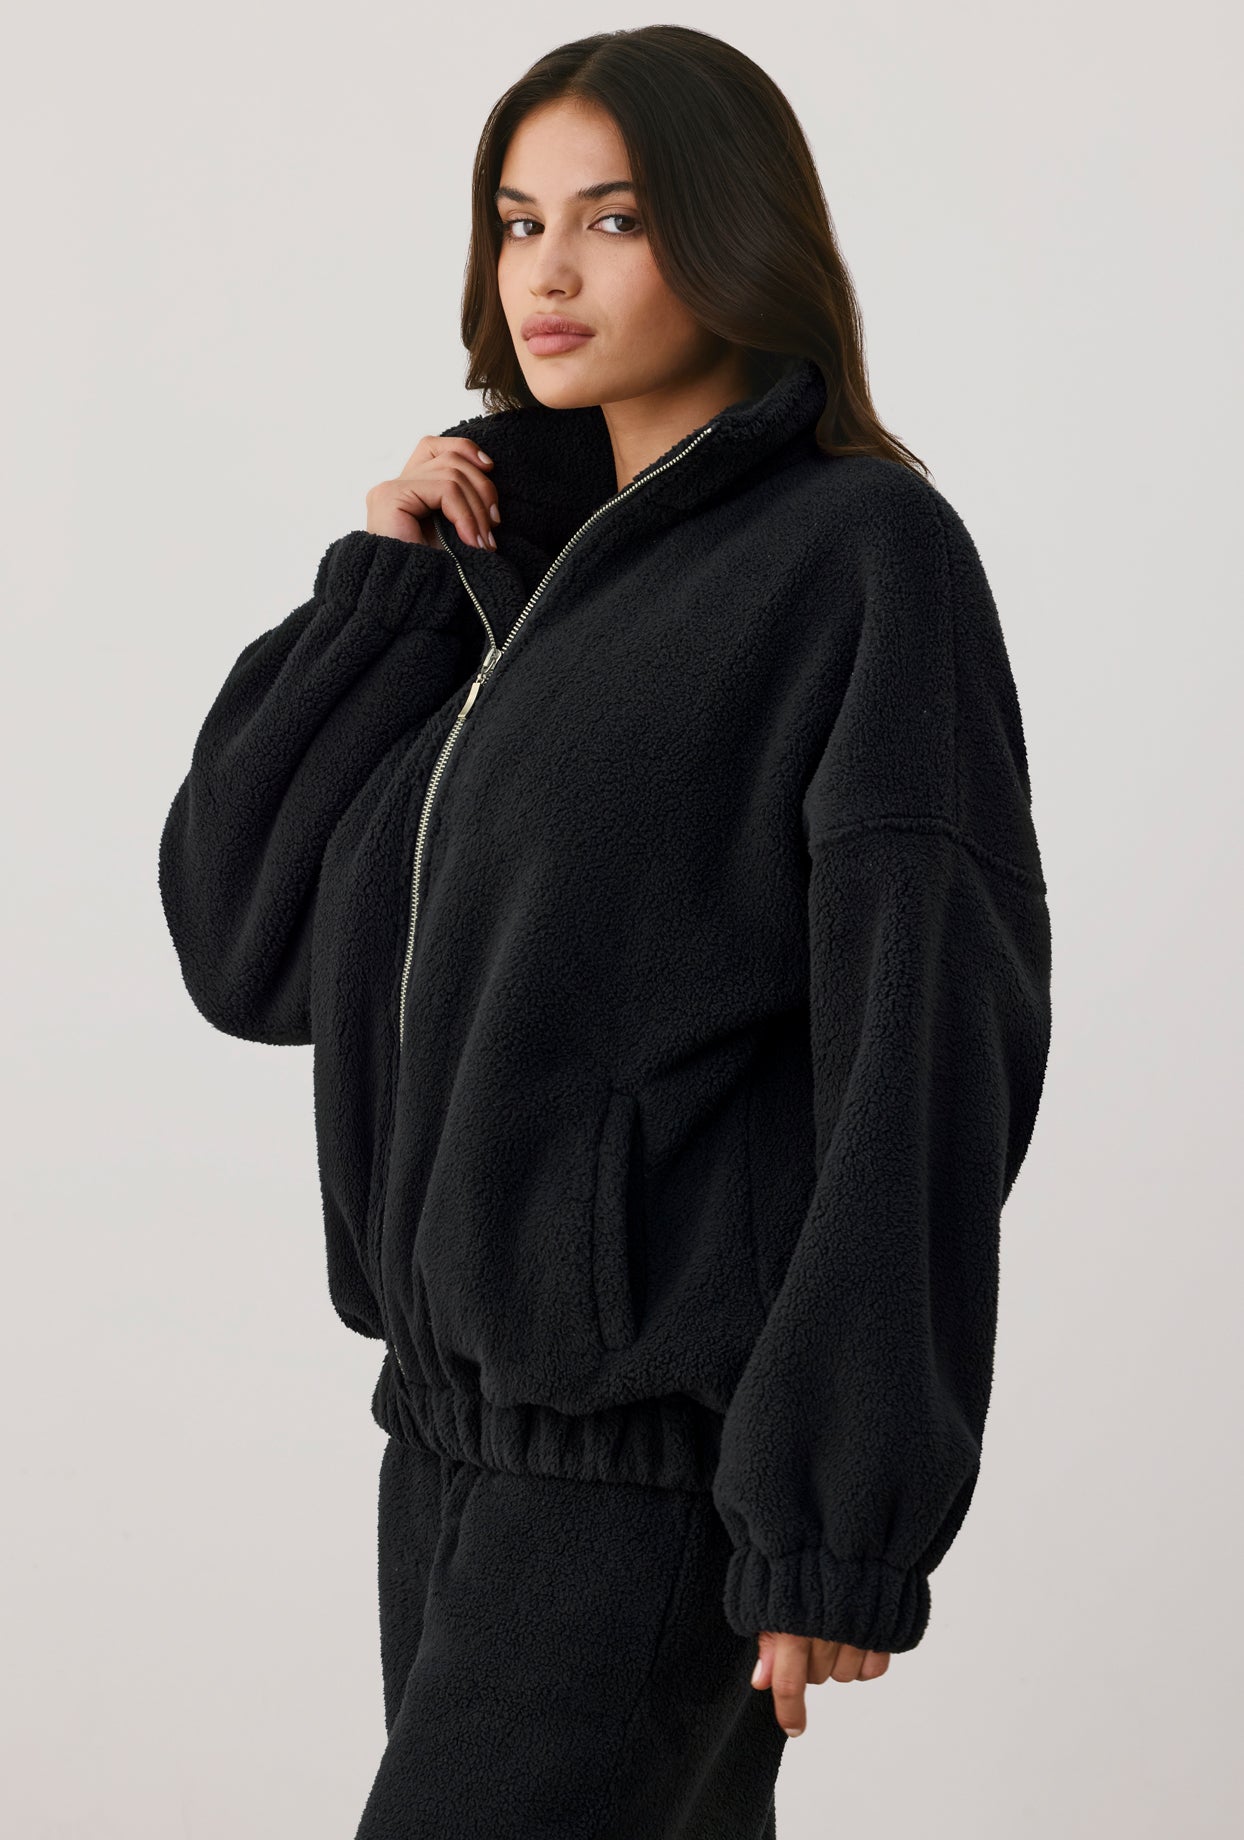 Oversized Fleece Zip Up Jacket in Onyx